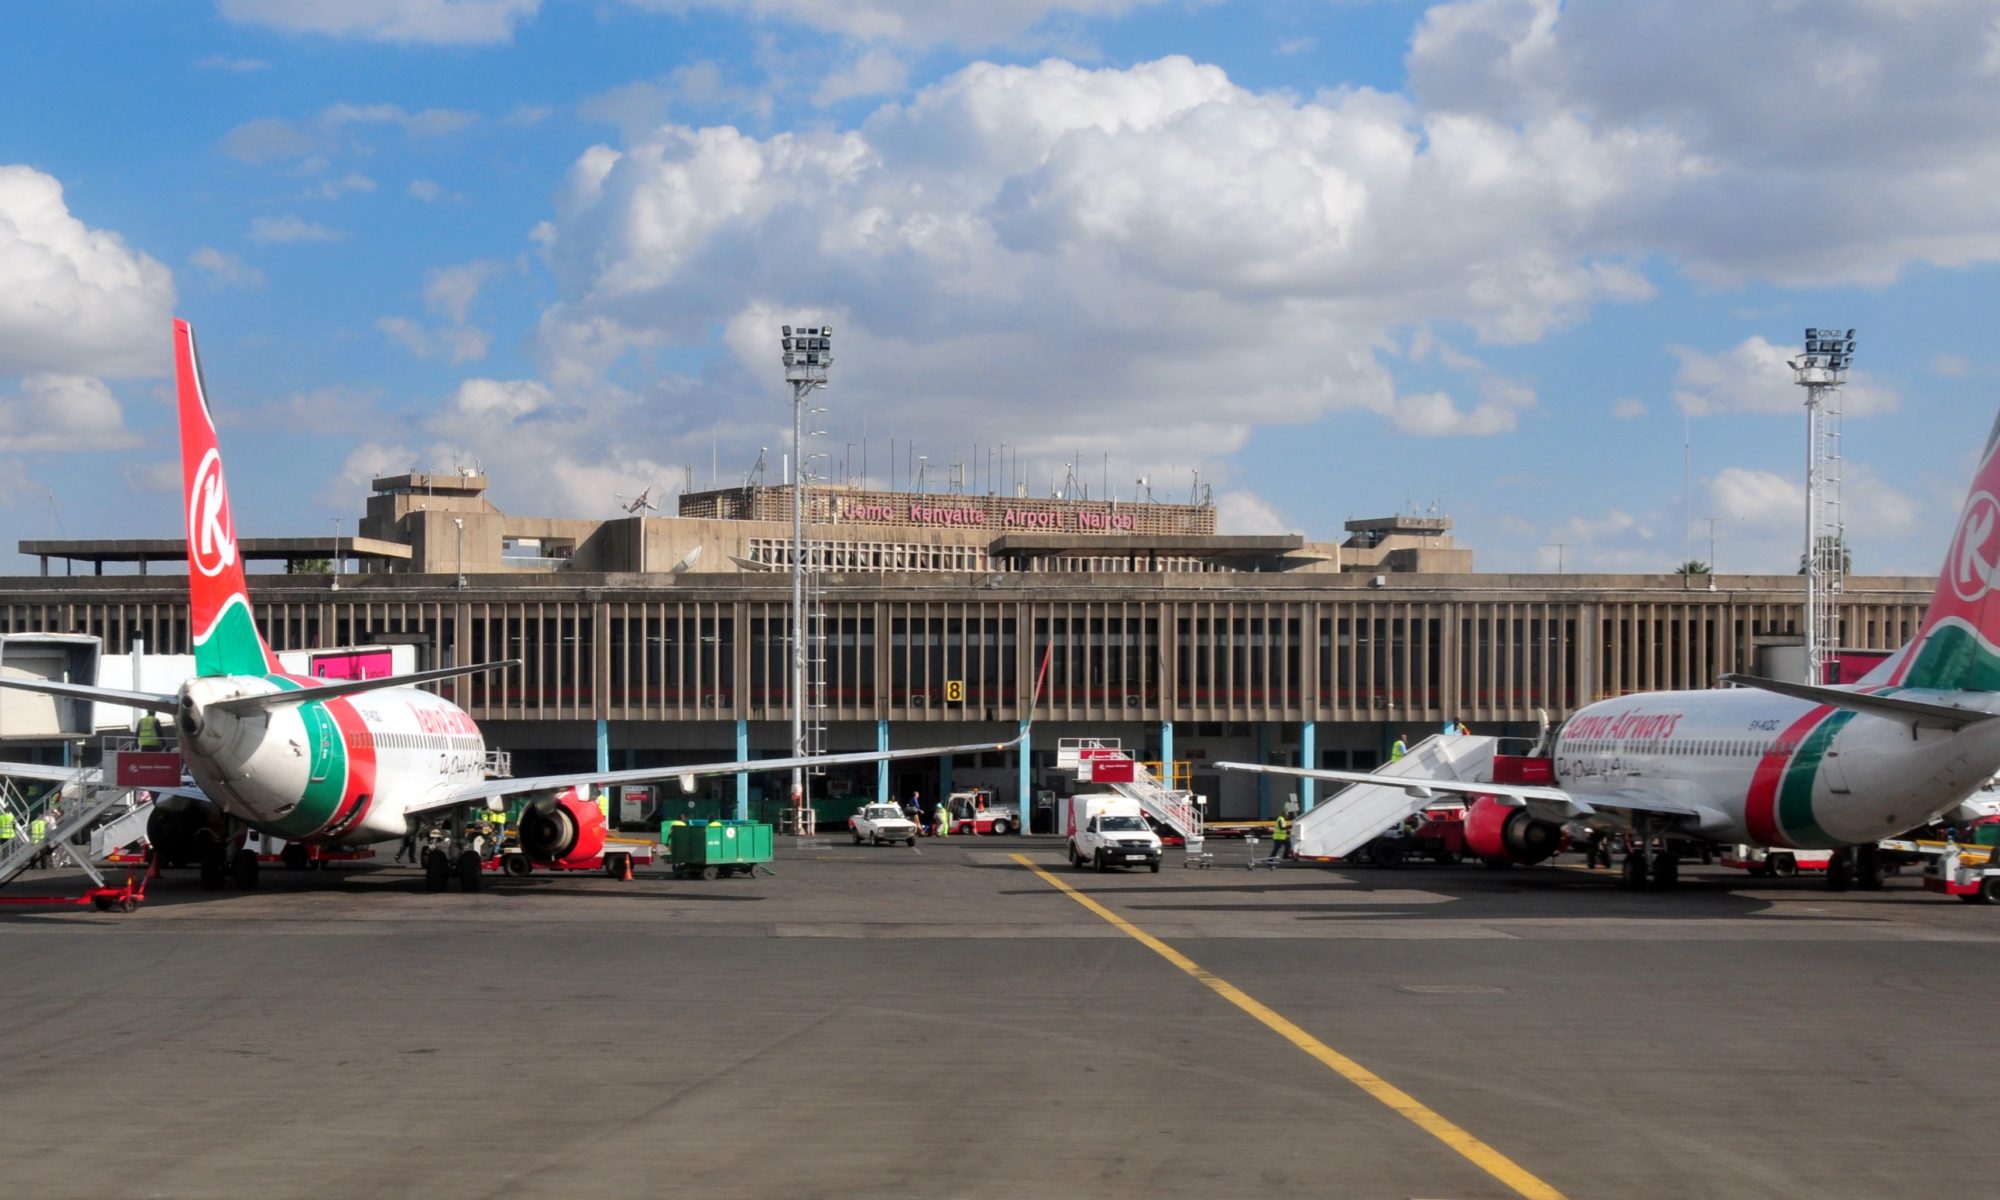 Nairobi, Kenya - August 24, 2008: Kenya Airways aircraft at the terminal building of Jomo Kenyatta International Airport